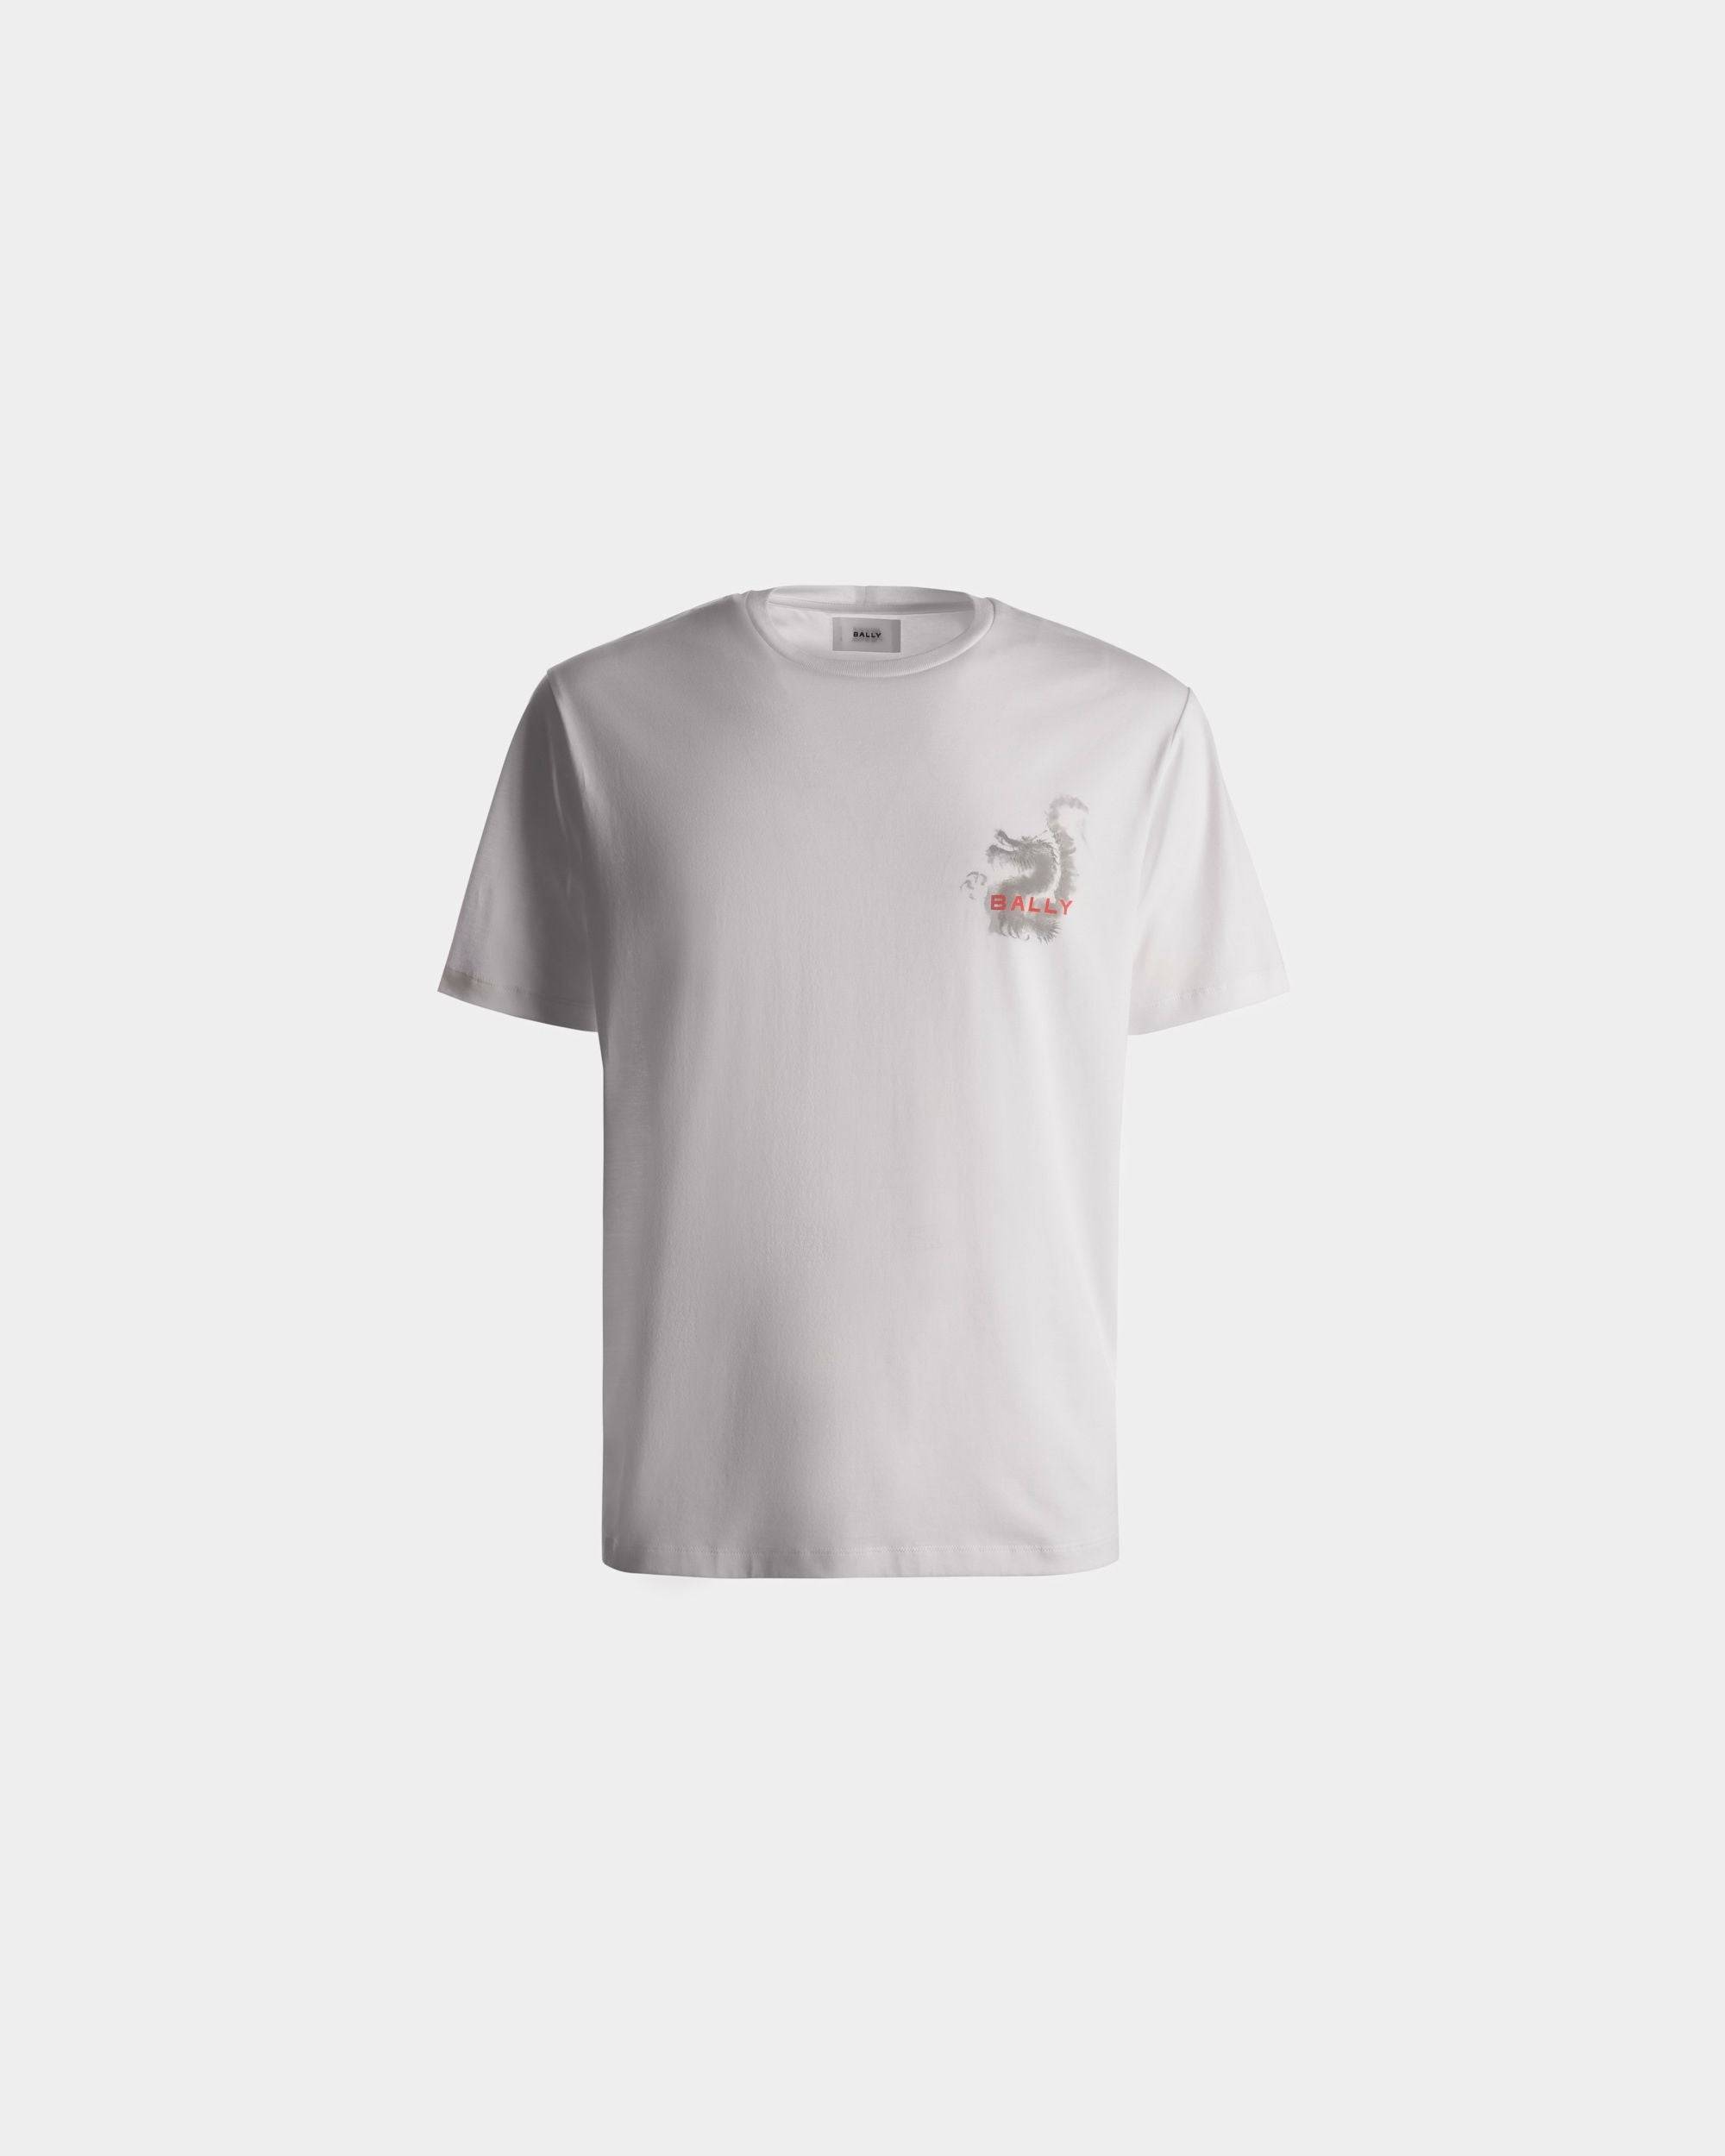 Men's T-Shirt In White Cotton | Bally | Still Life Front